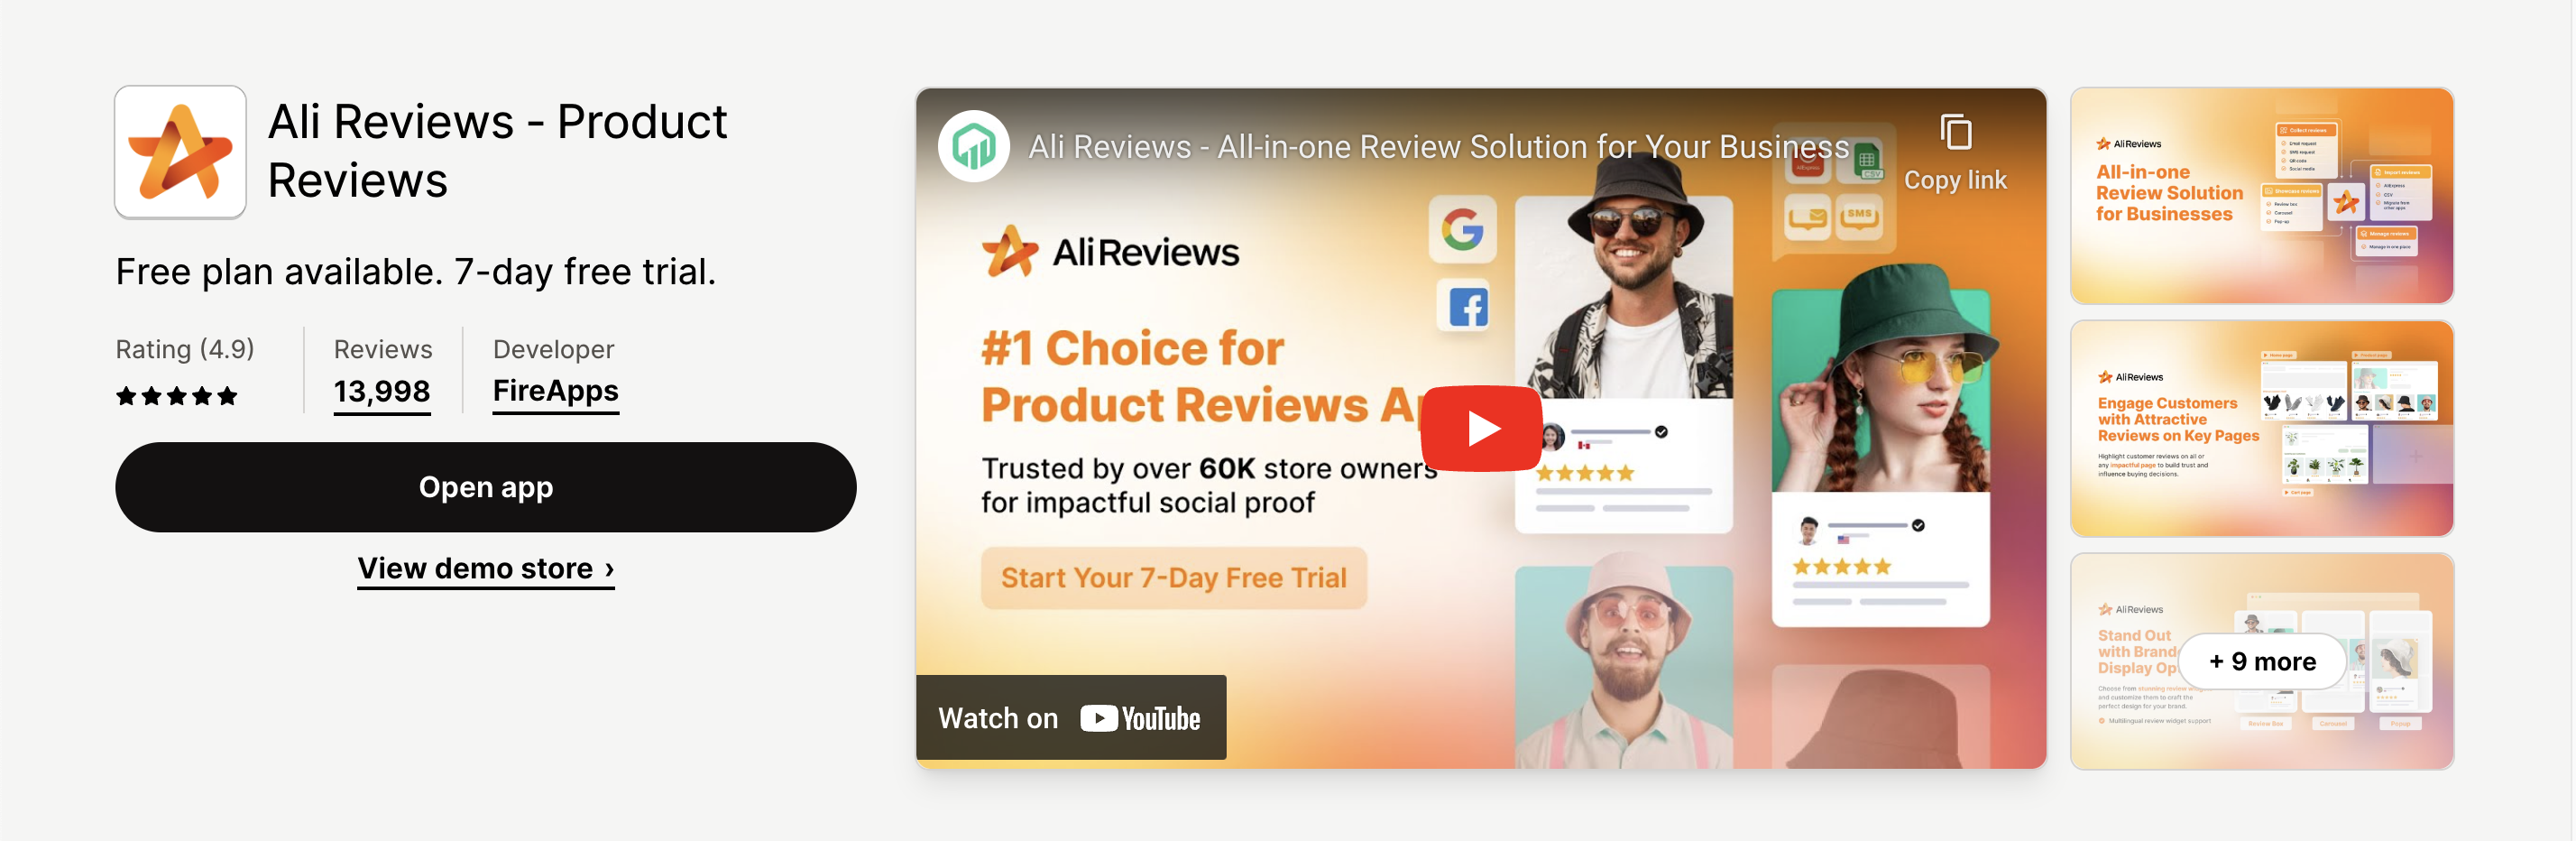 Ali Reviews - Product Reviews